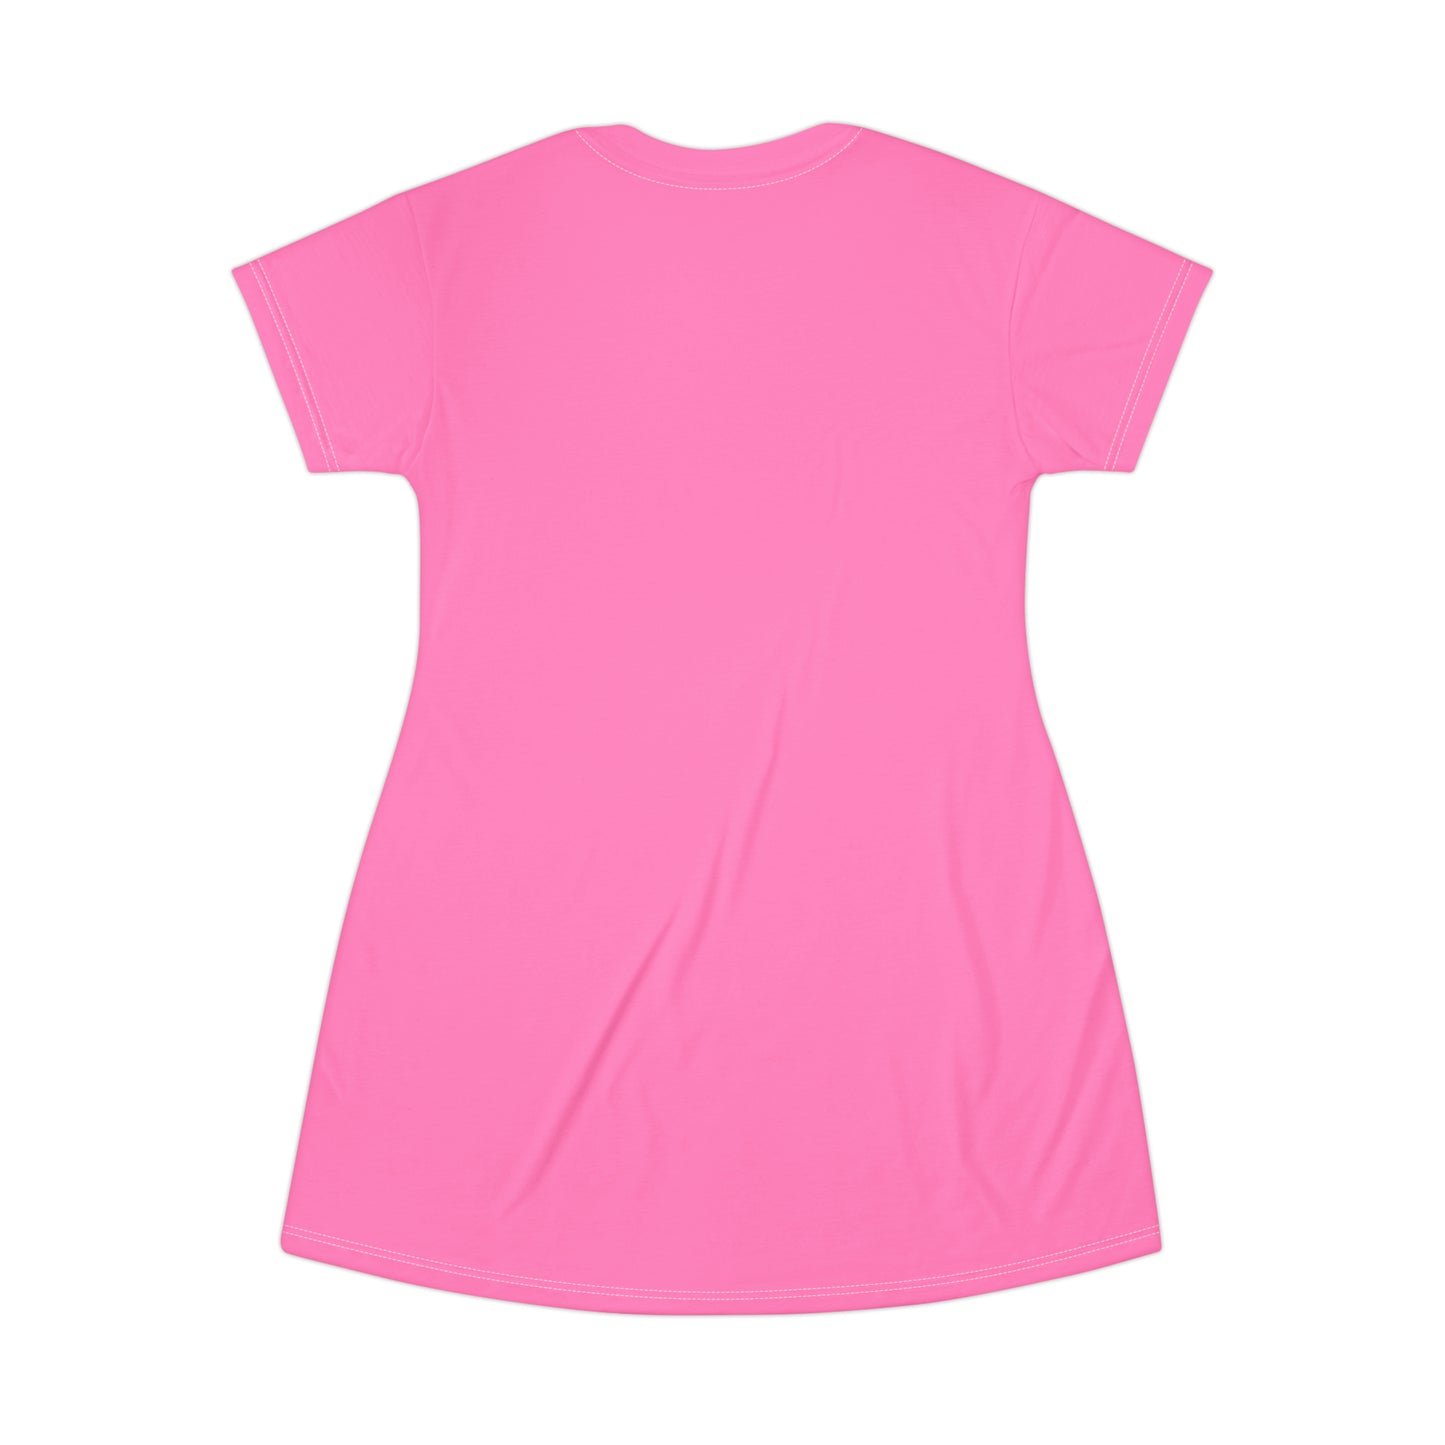 Rose Pink T-shirt Dress